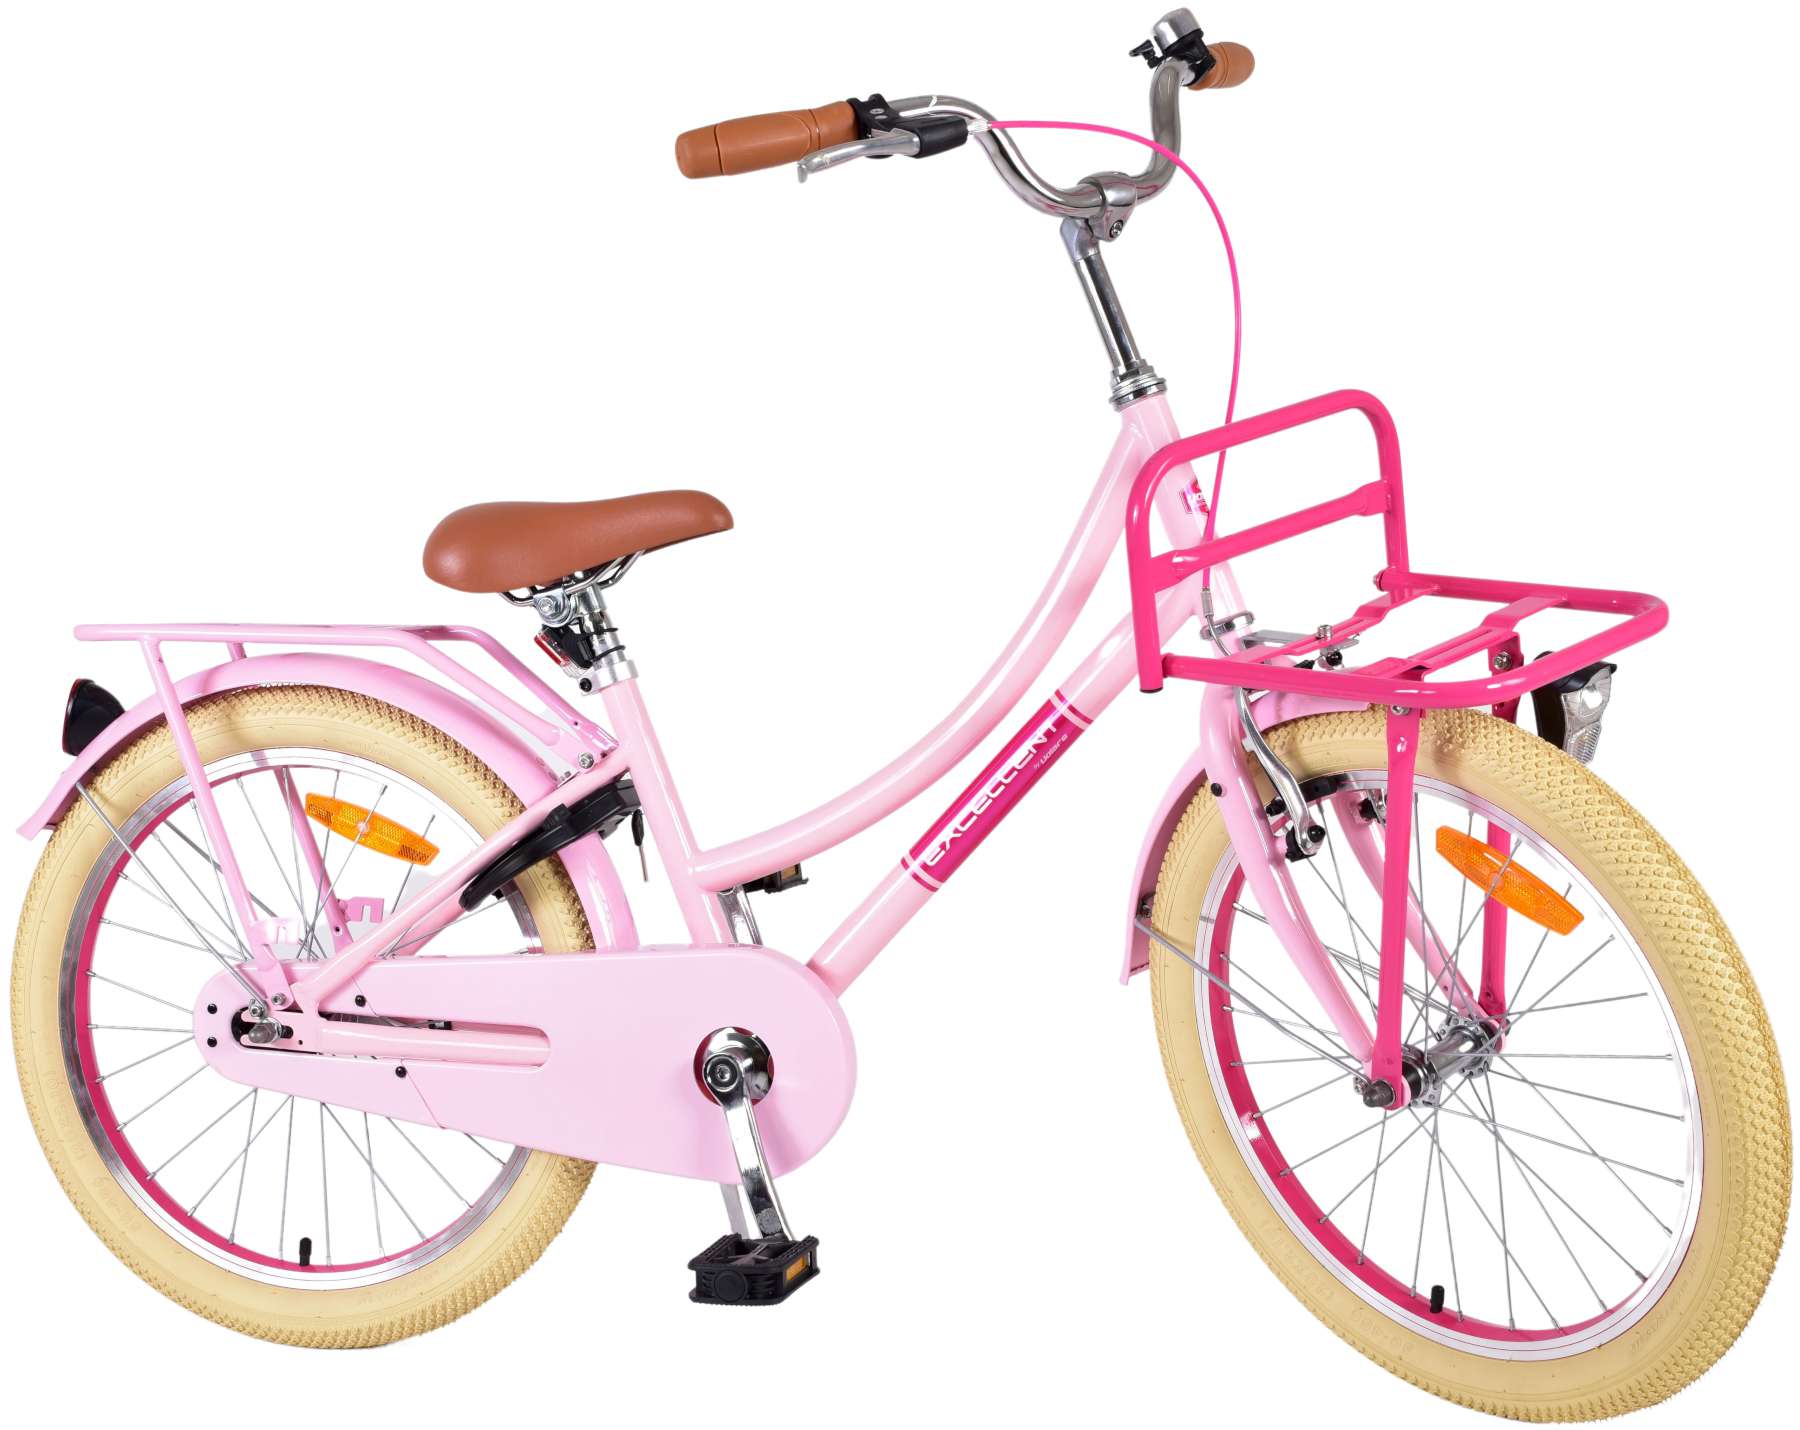 Myland b02000004 bicicleta kid 201 nina 20 6 8 anos 1v rosa Bicicleta